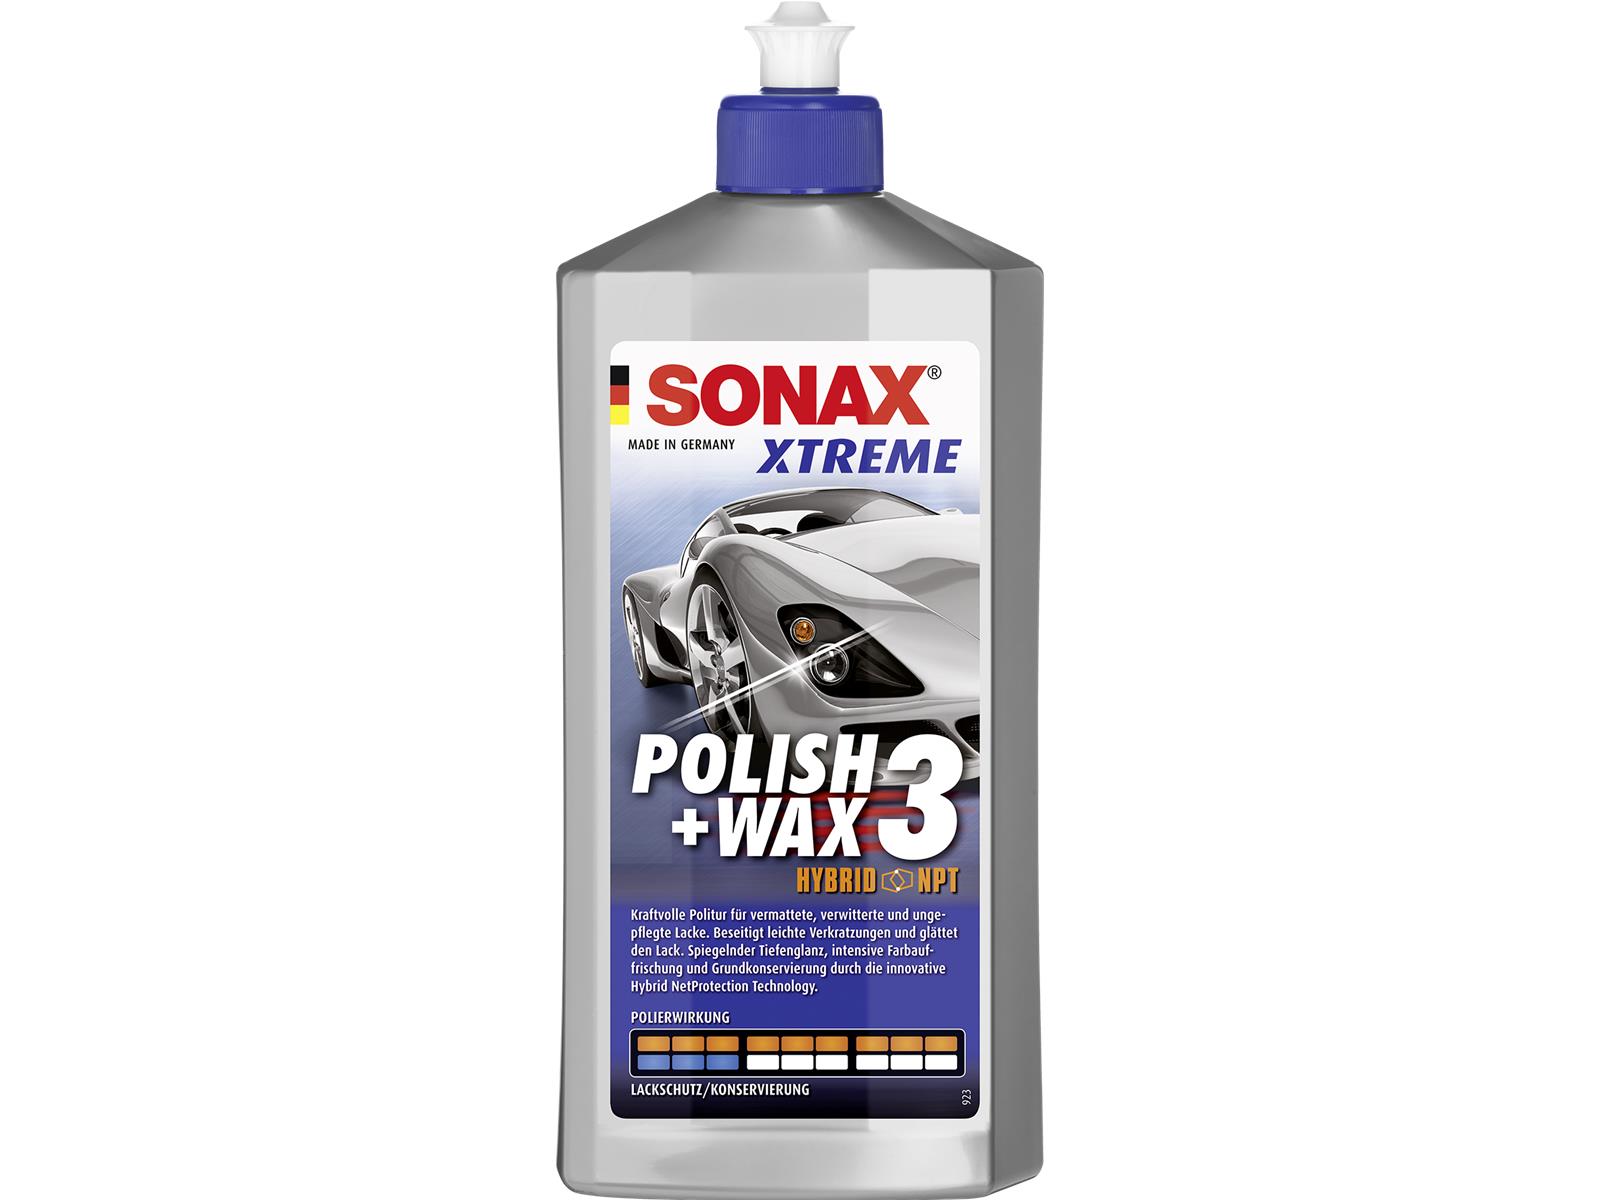 SONAX 02022000 XTREME Polish + Wax 3 Hybrid NPT 500 ml